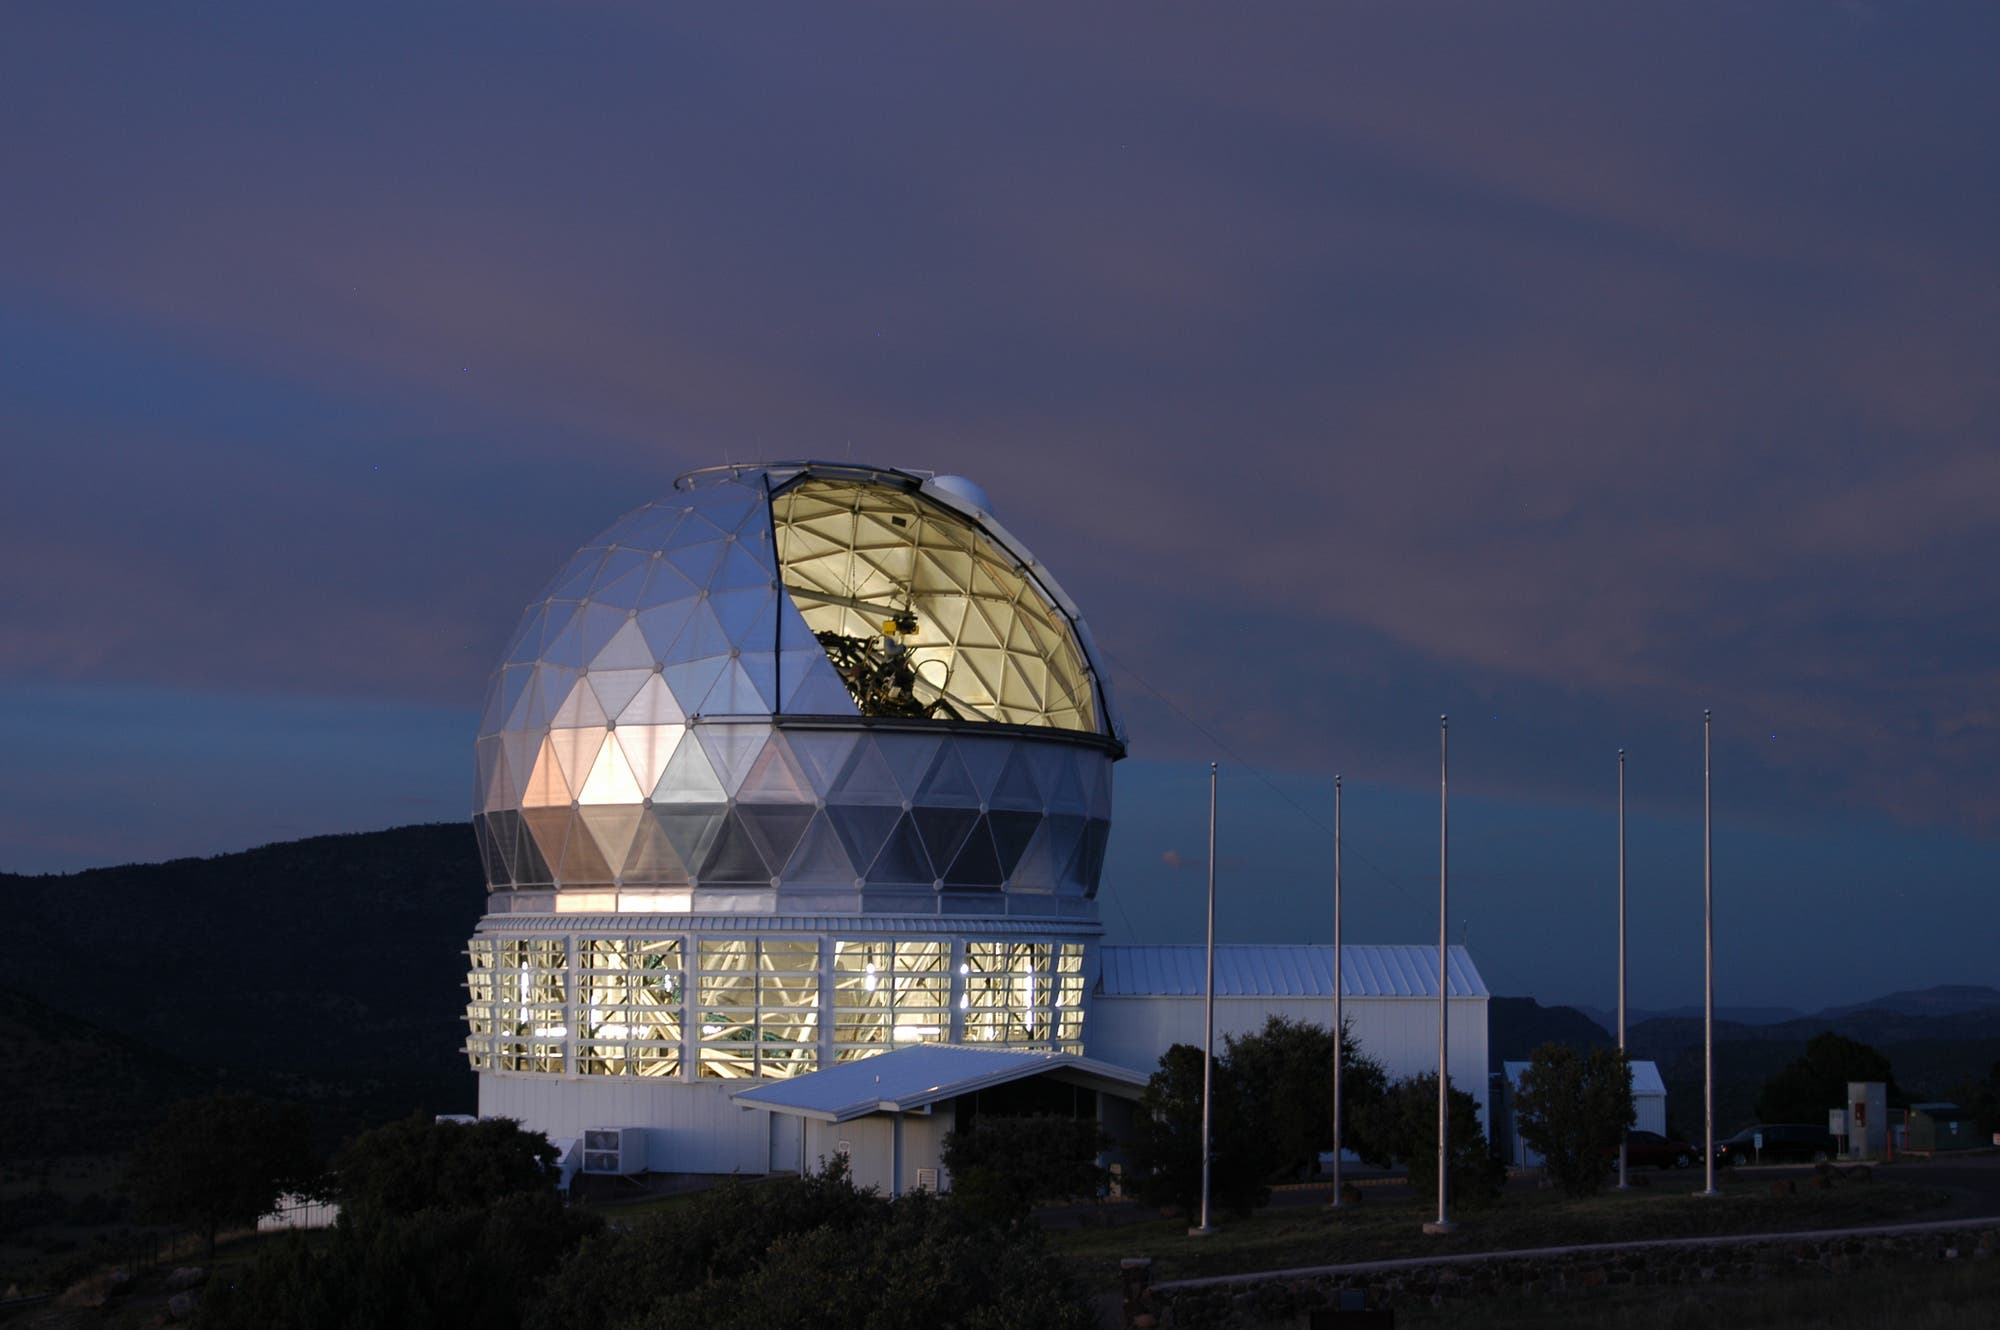 Das Hobby-Eberly Teleskop